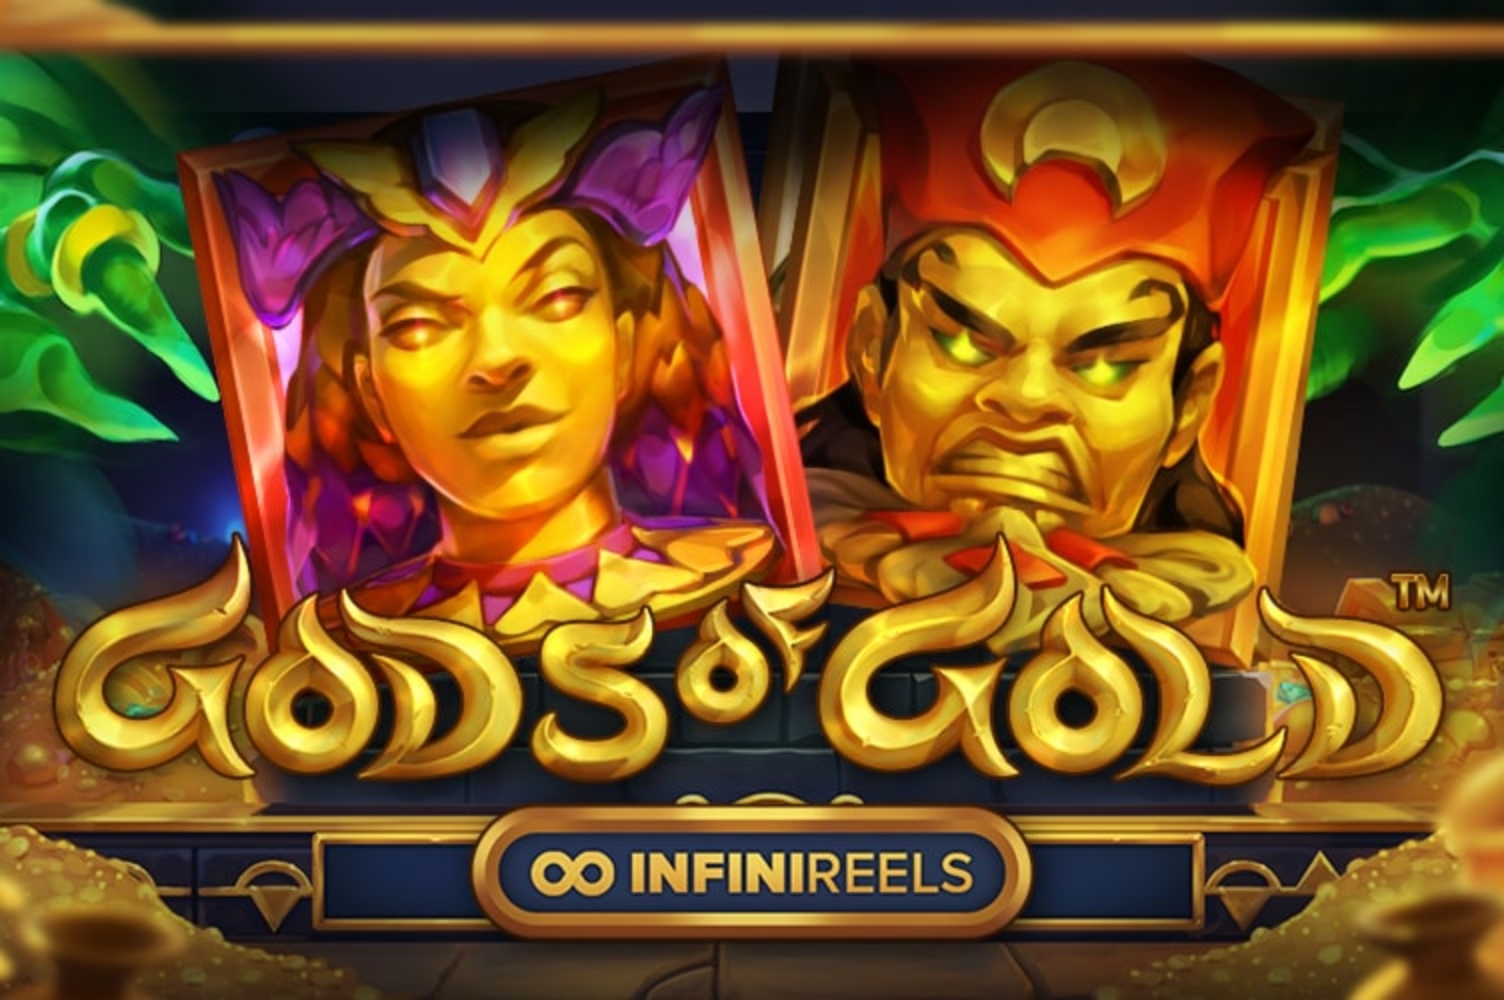 Gods of Gold Infinireels demo